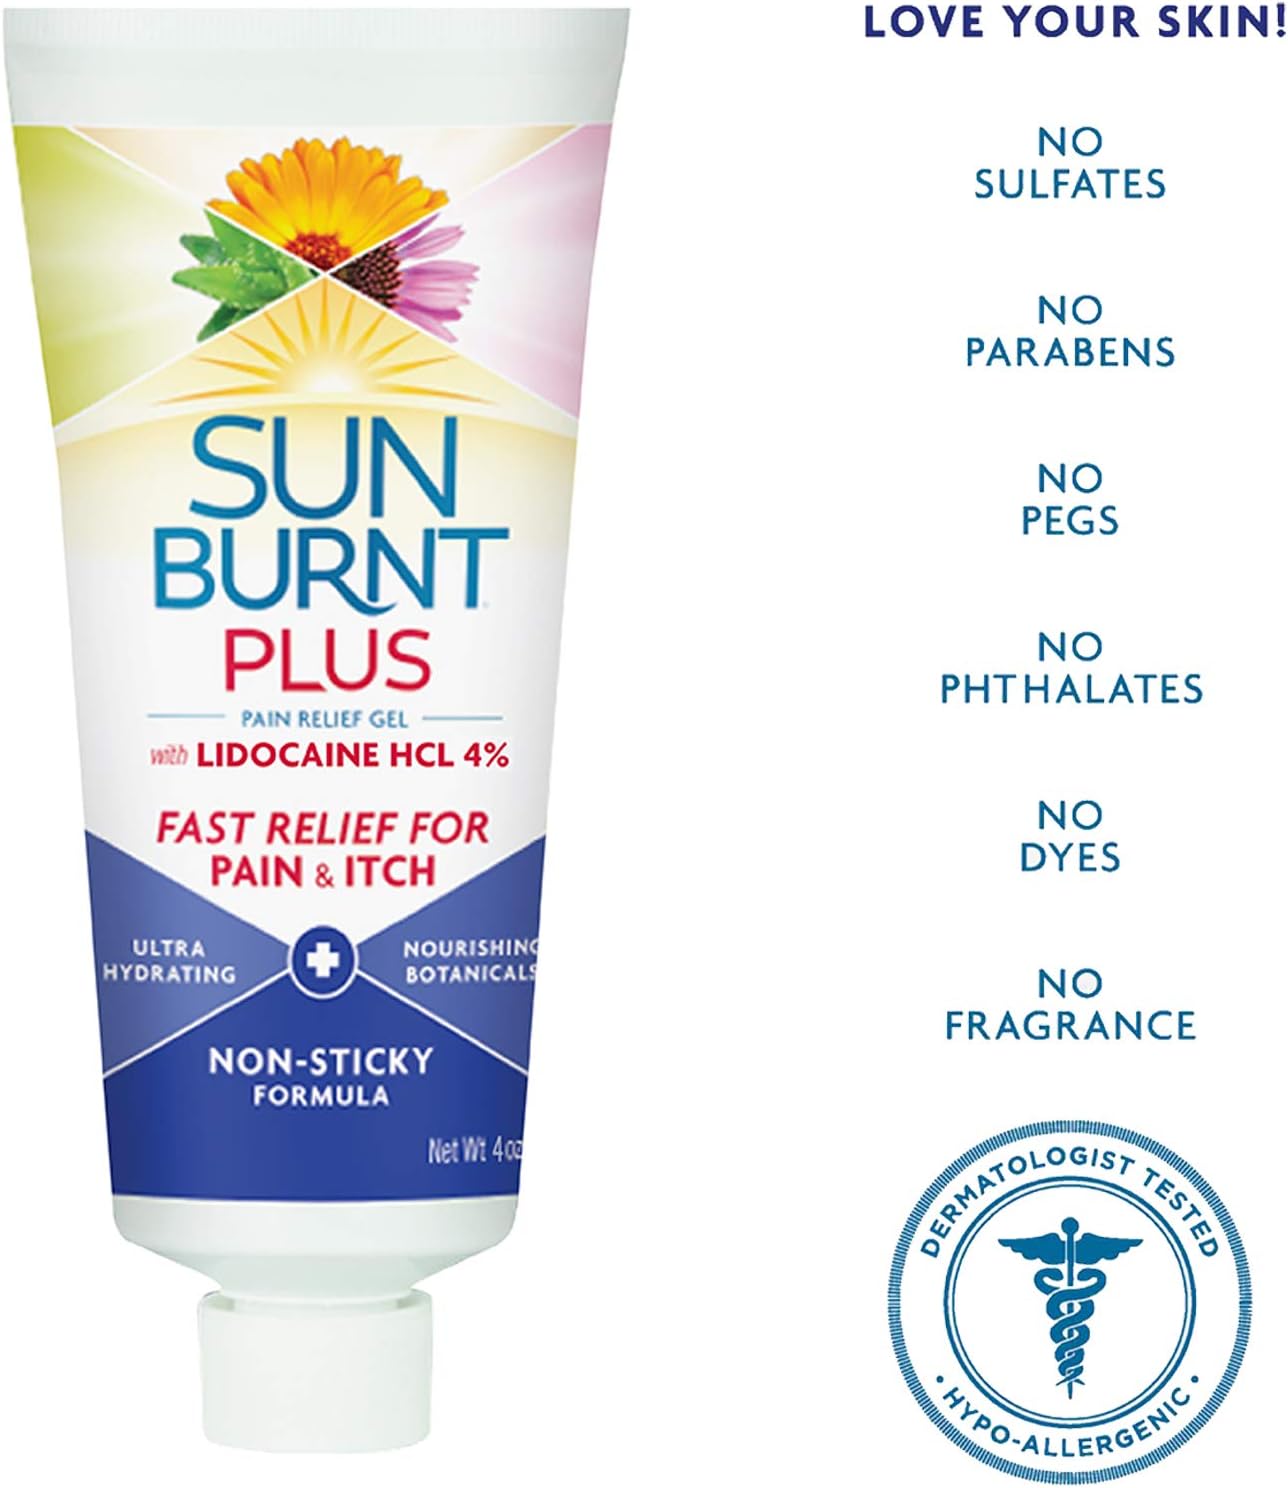 Sunburnt Plus After-Sun Gel with Lidocaine, 4 Ounce : Beauty & Personal Care